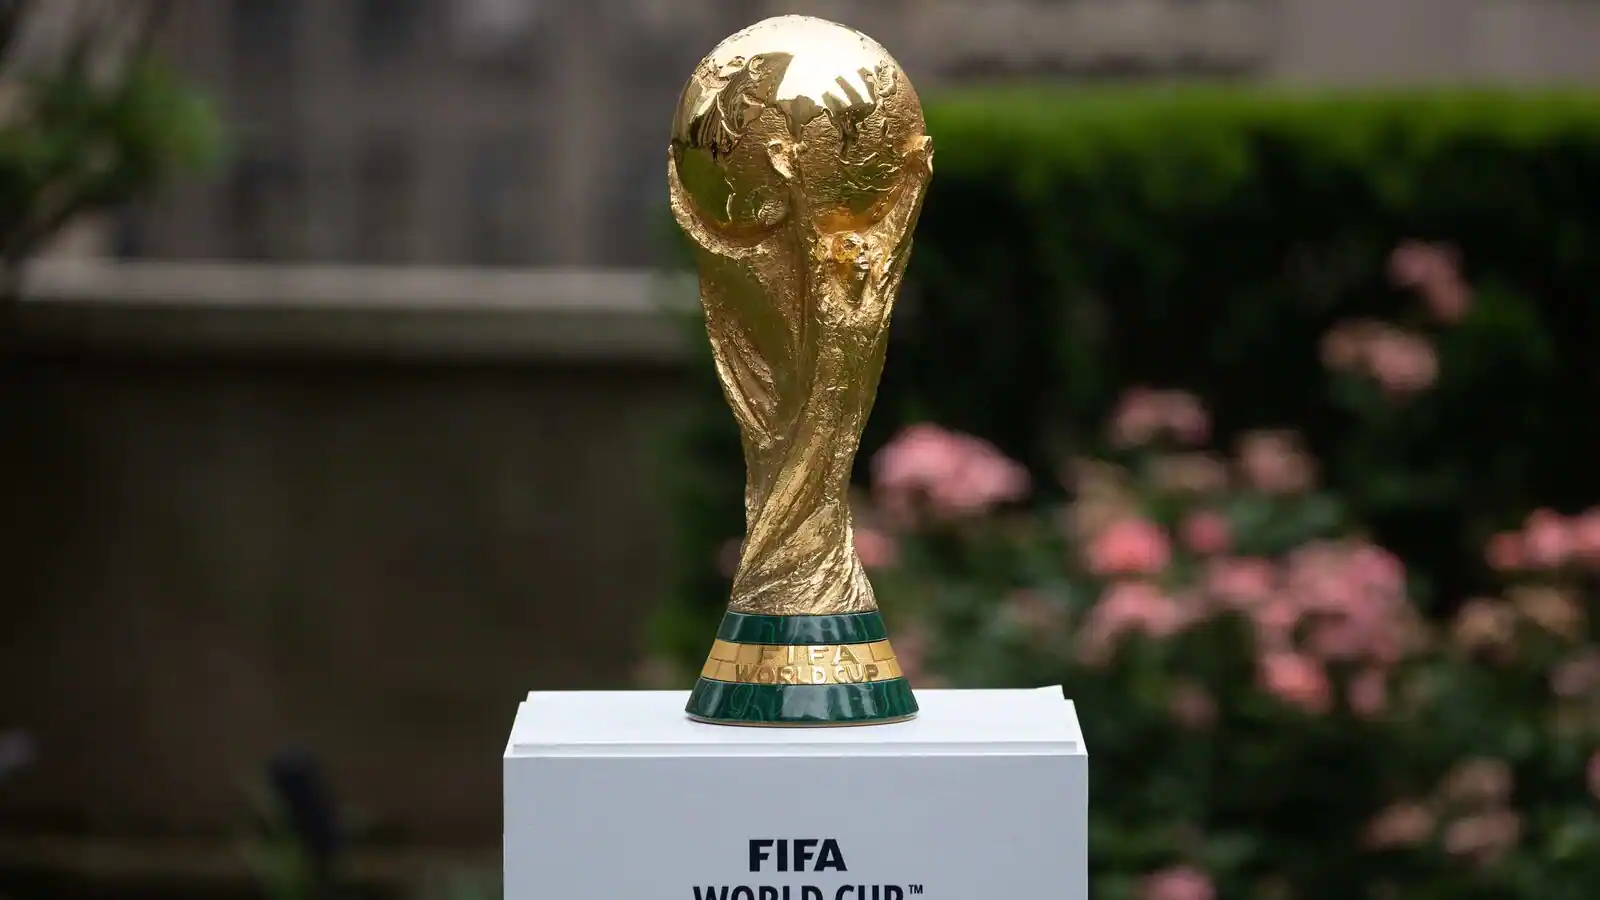 fifa world cup 1656997258973 1660124855720 1660124855720.jpg